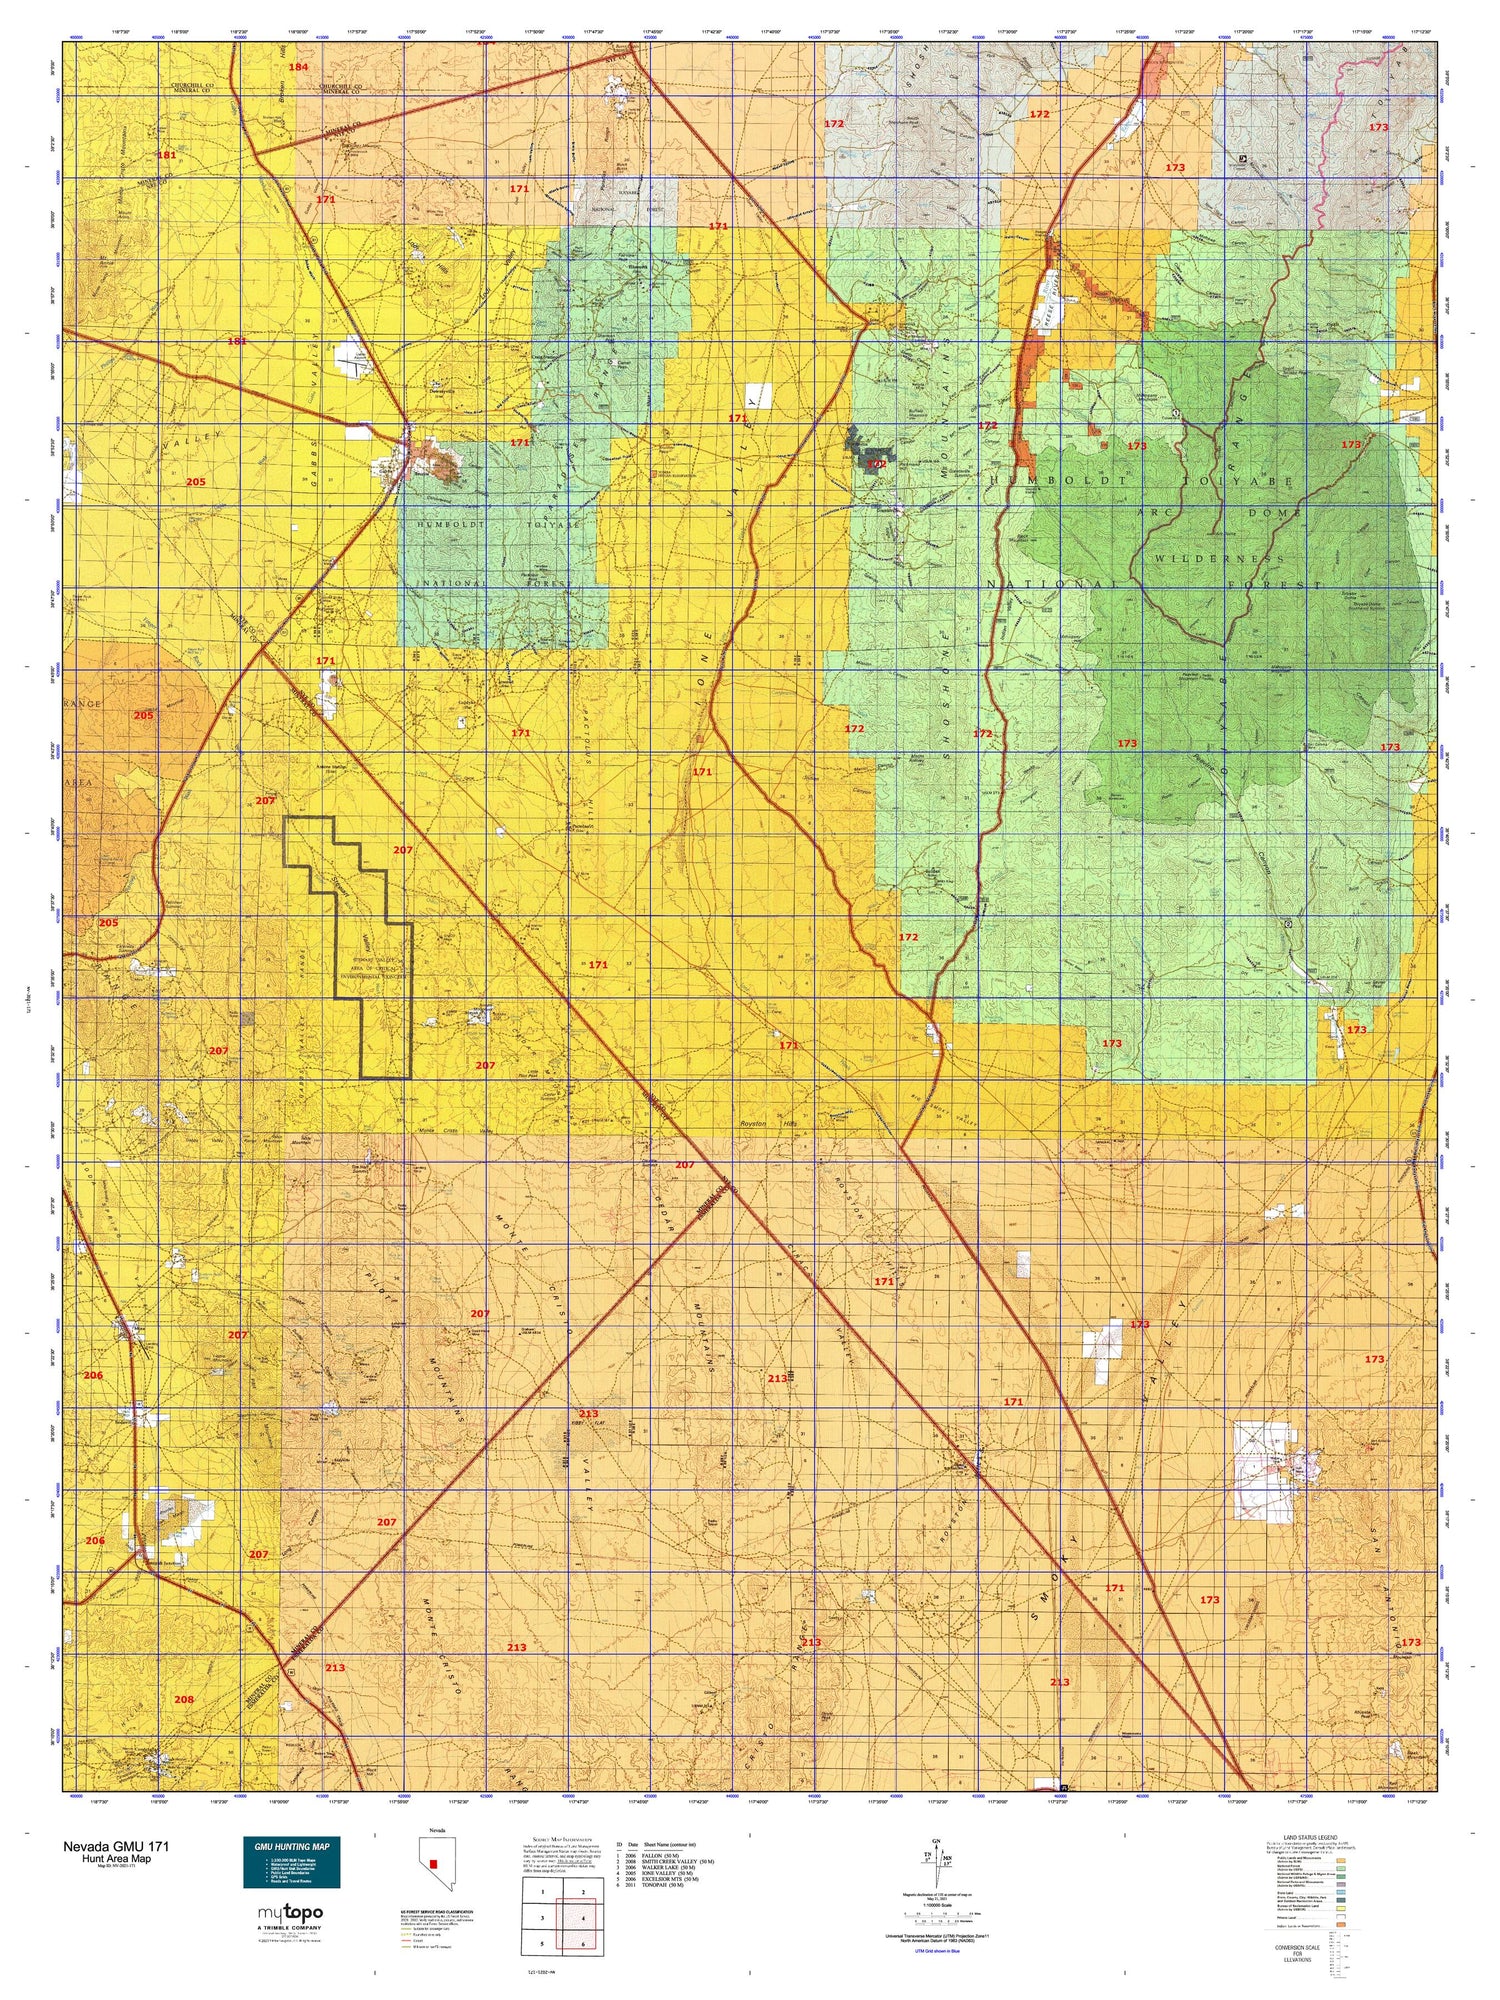 Nevada GMU 171 Map Image